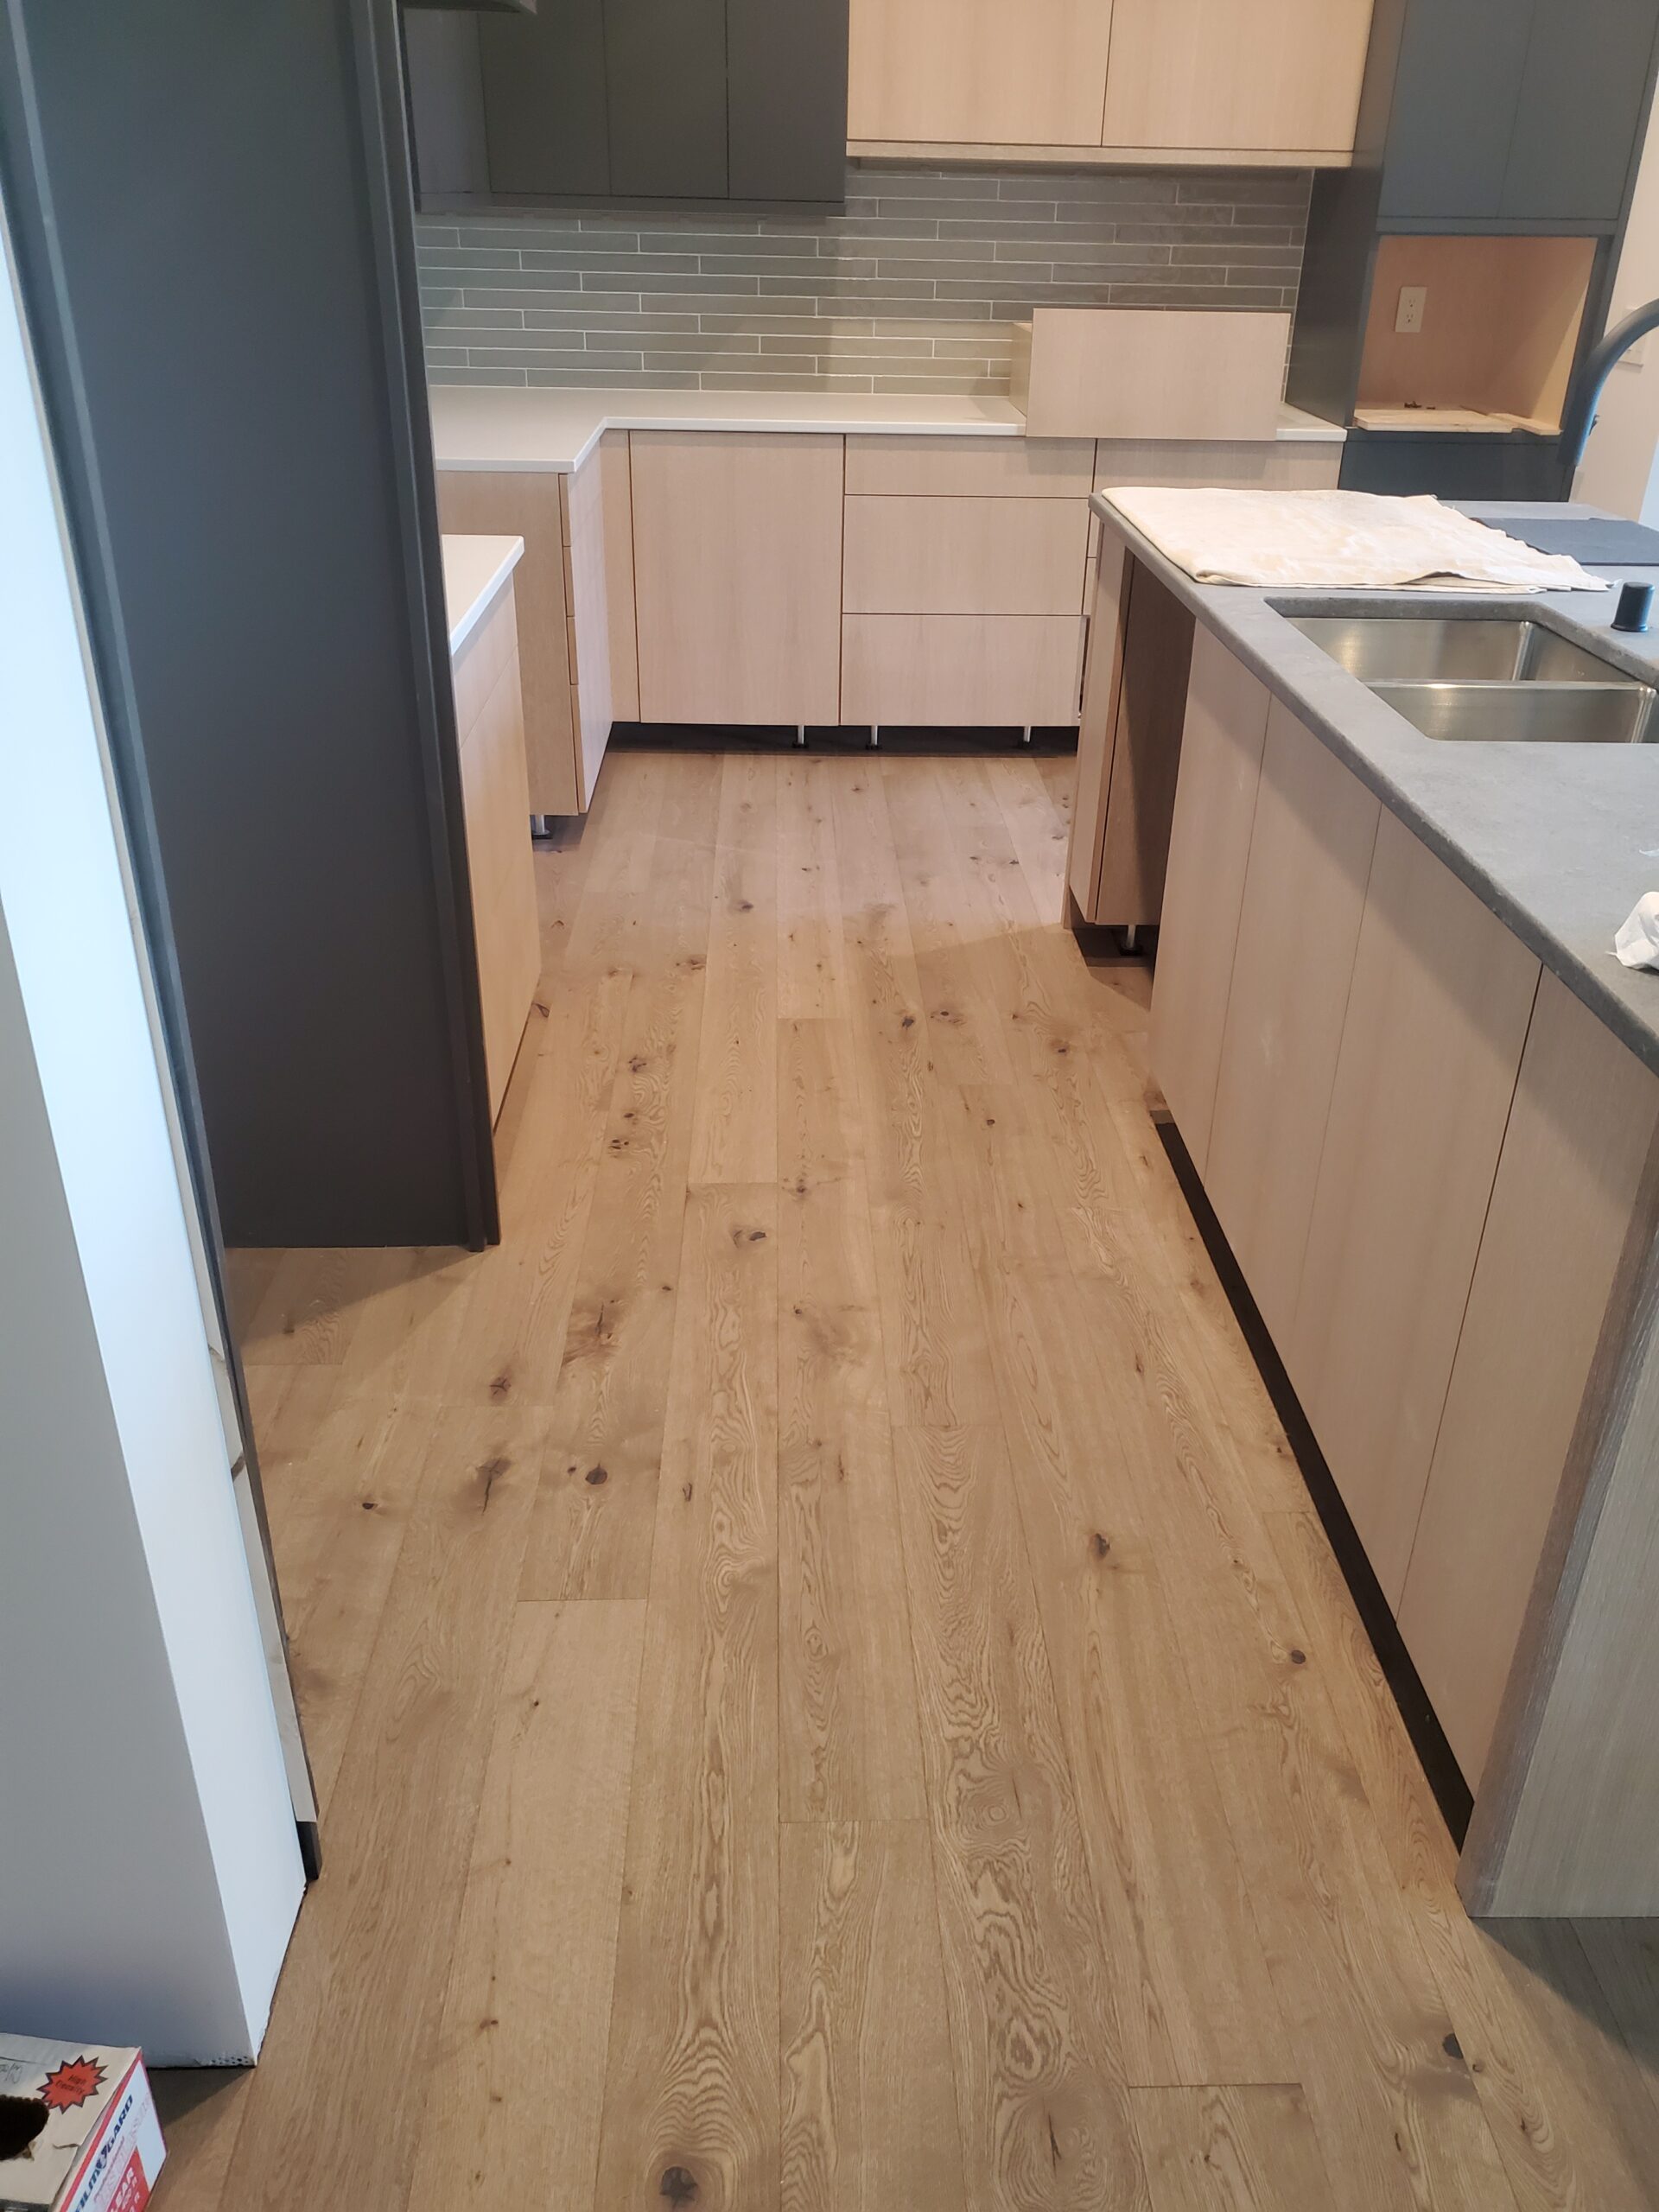 Hardwood flooring in Kitchen